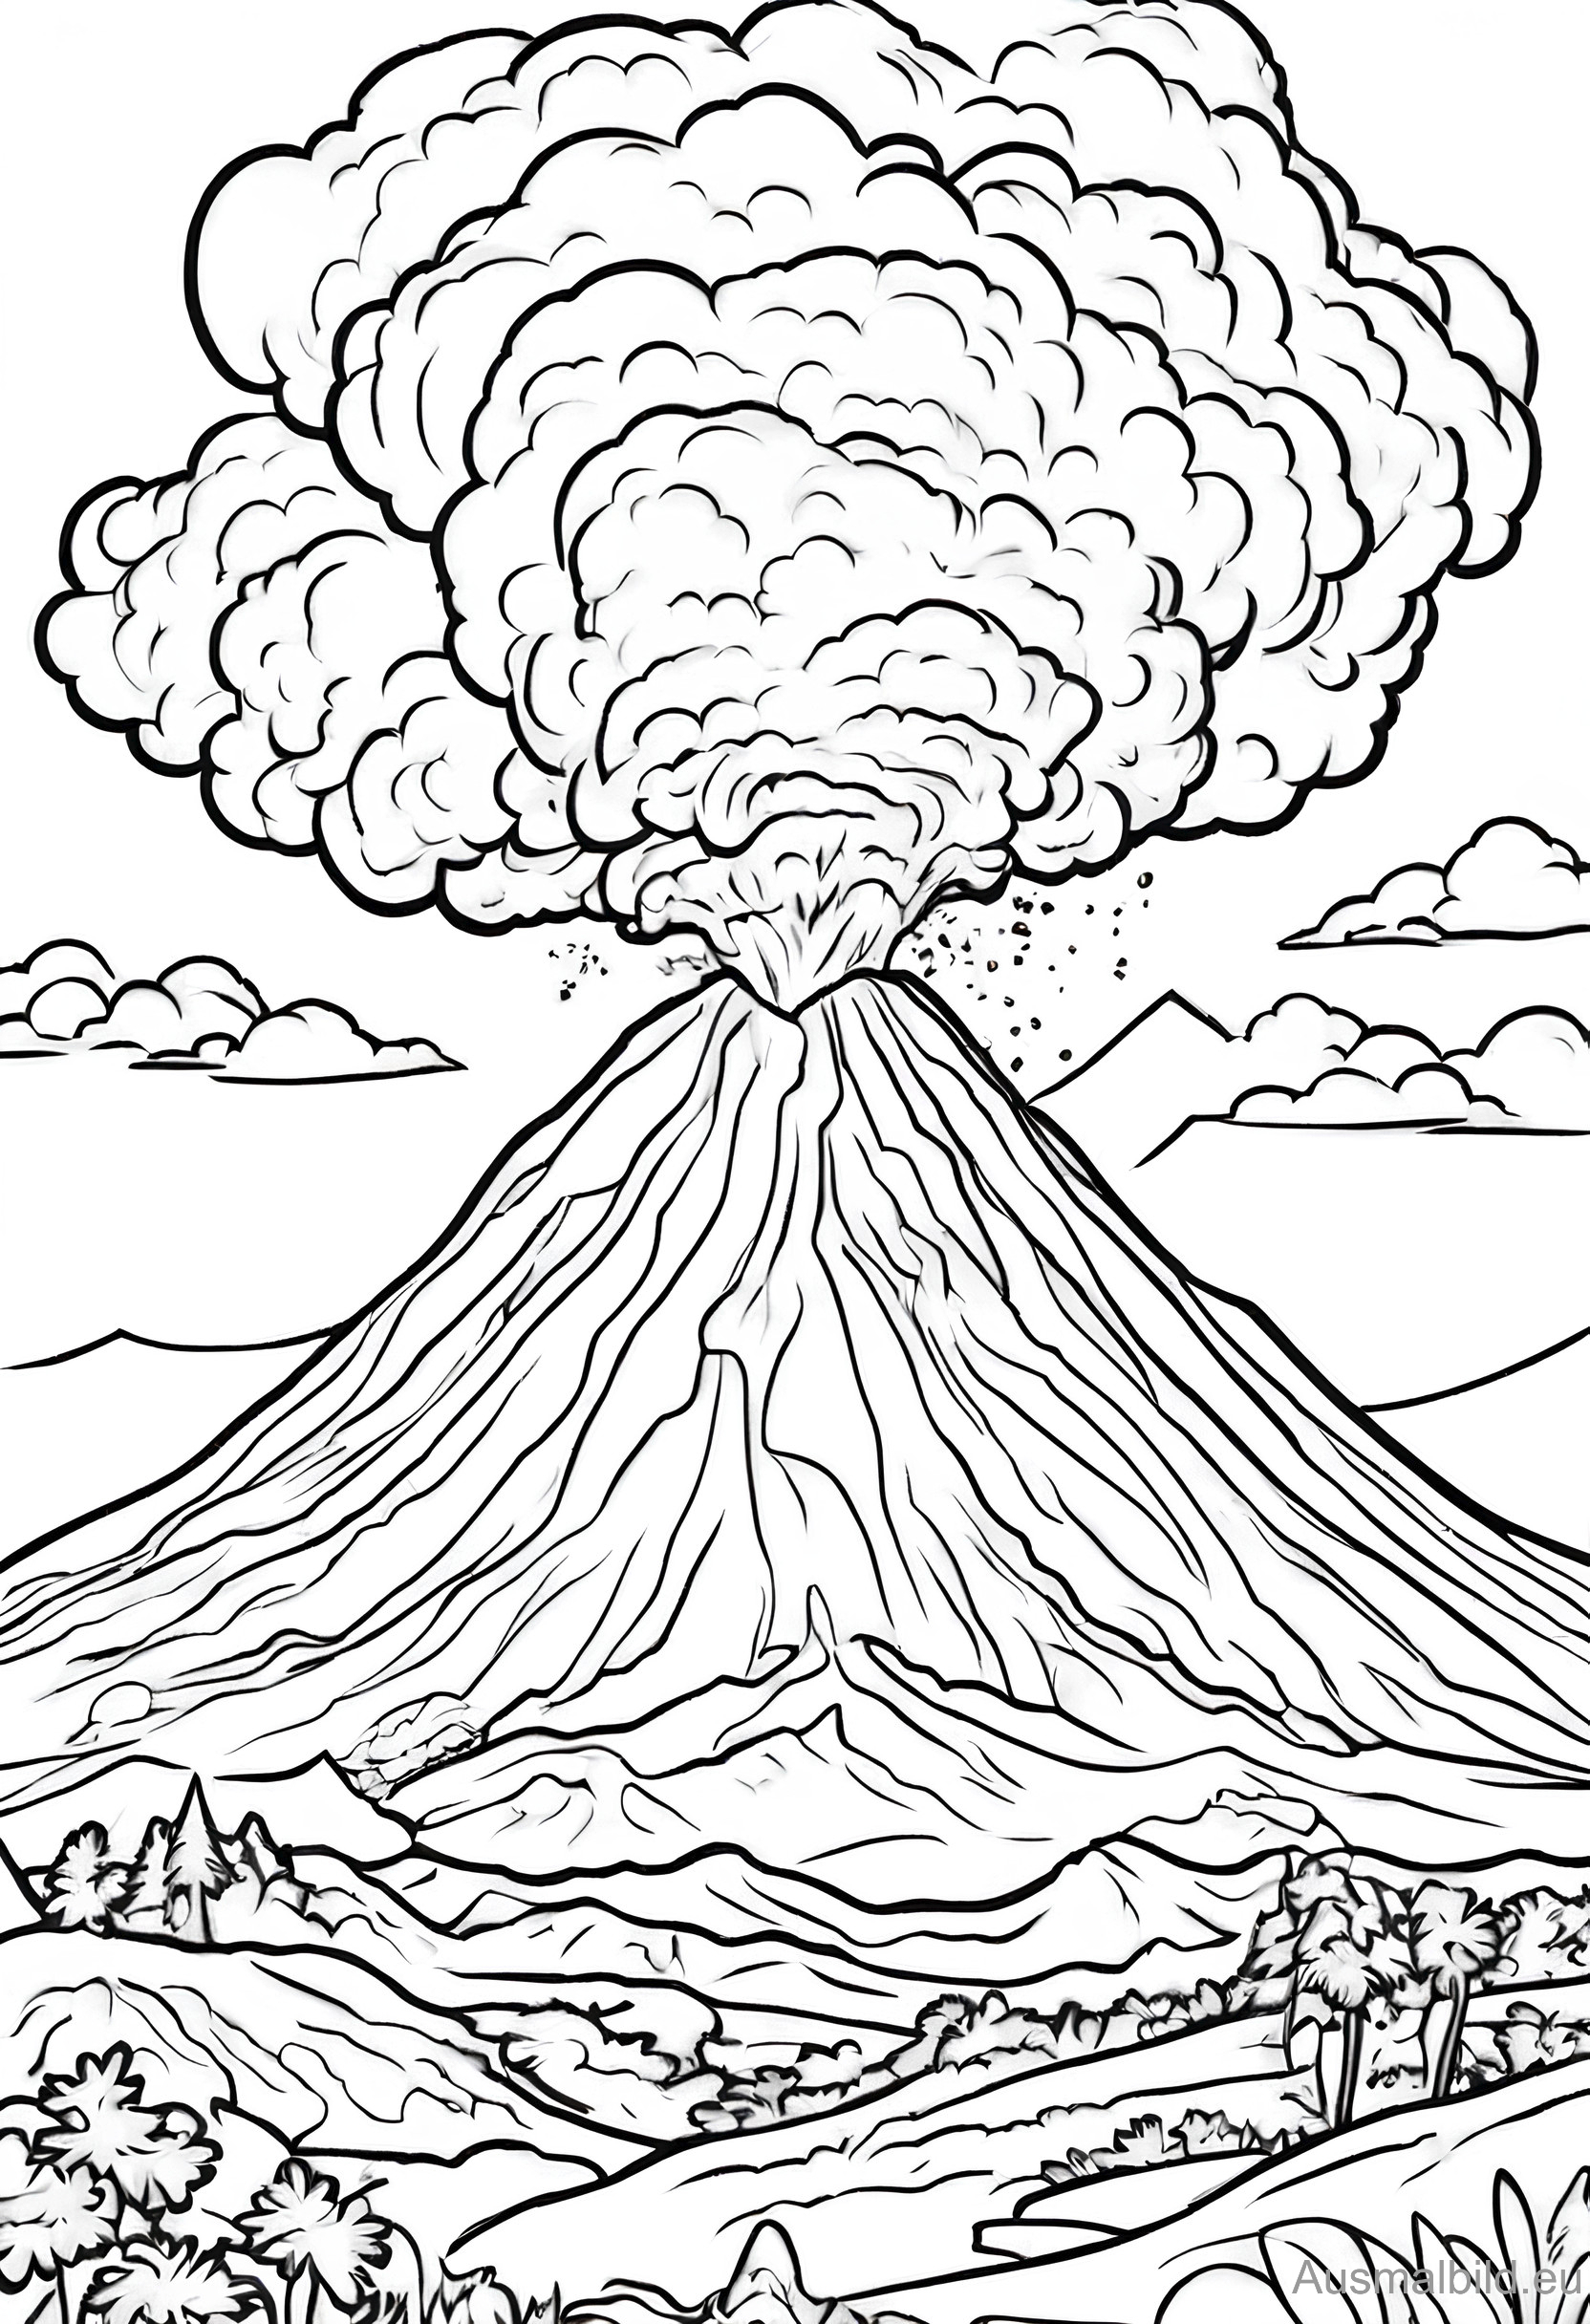 Ausmalbild: Vulkanausbruch